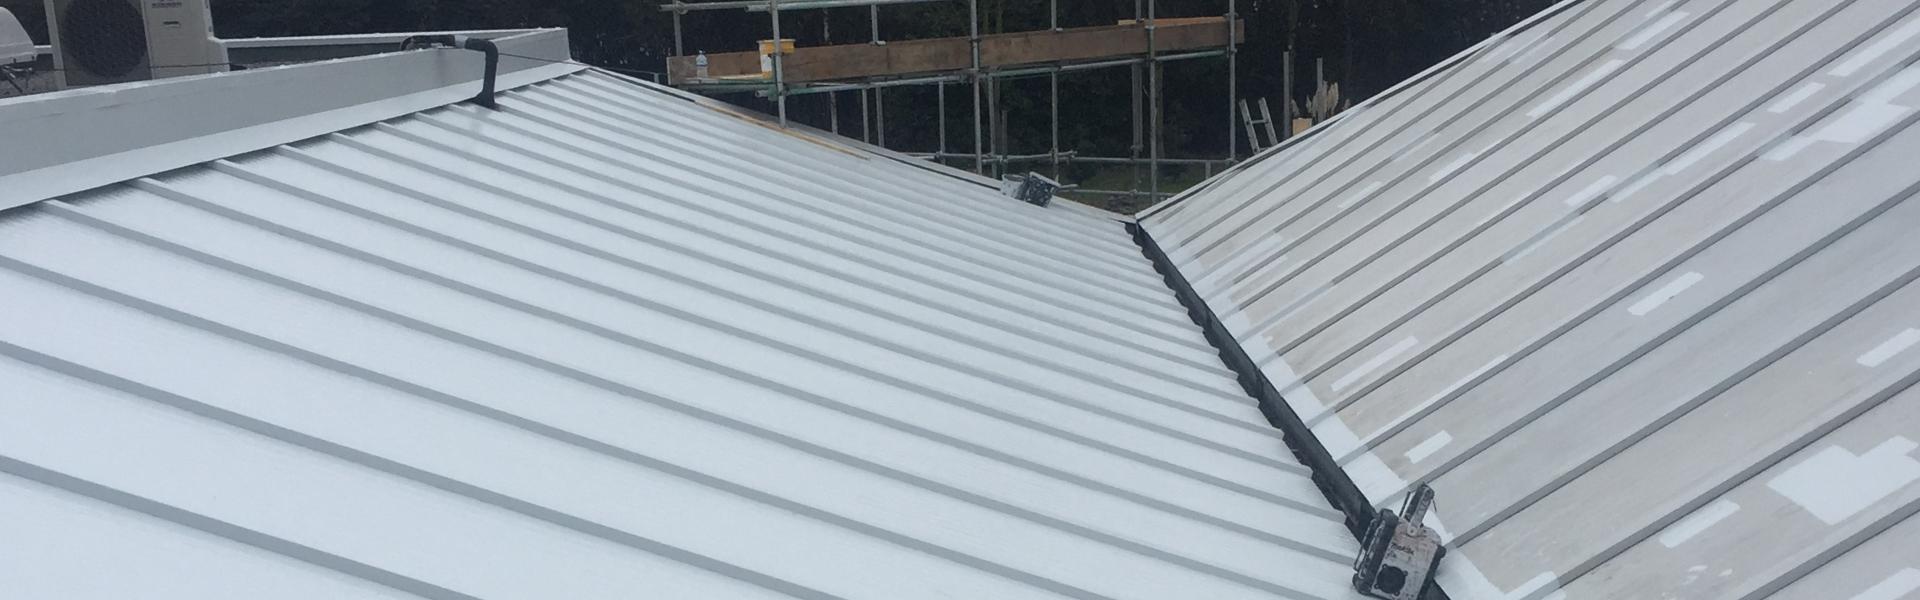 Metal Sheet Roof Maintenance